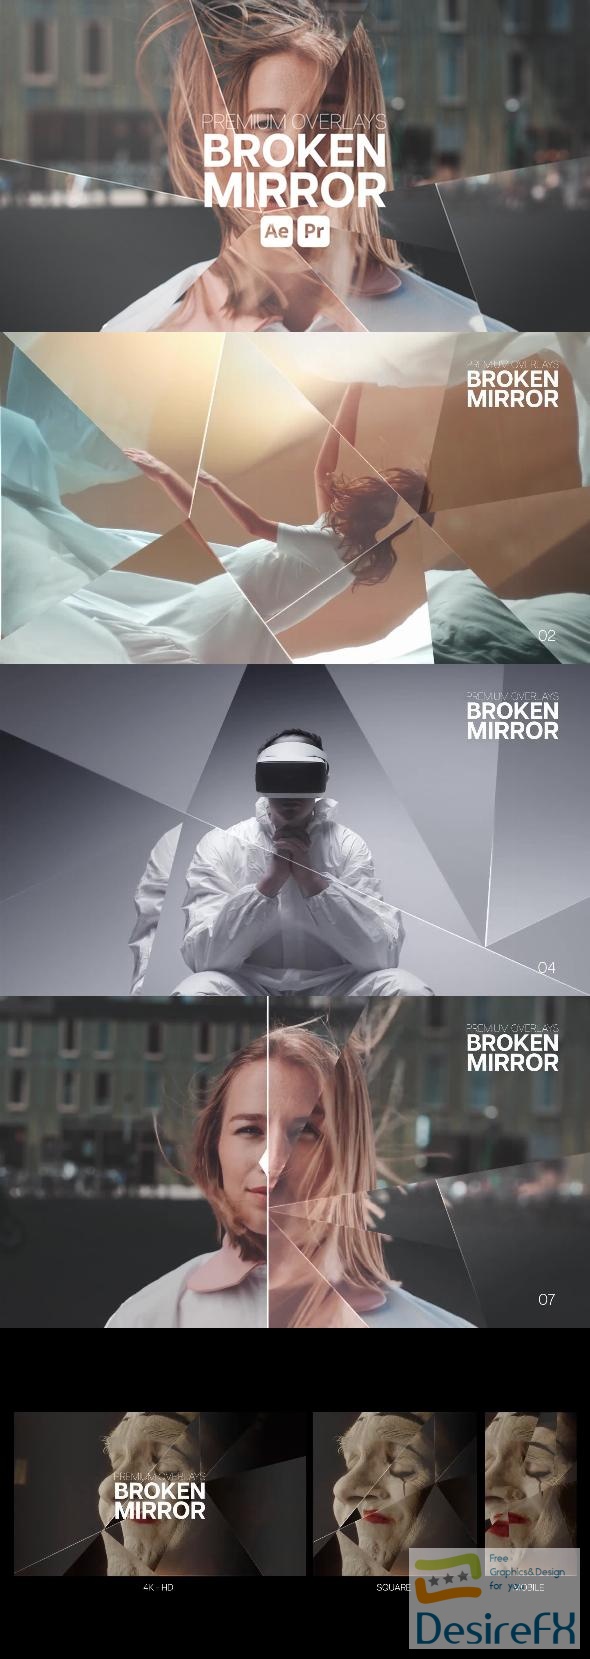 VideoHive Premium Overlays Broken Mirror 43242371